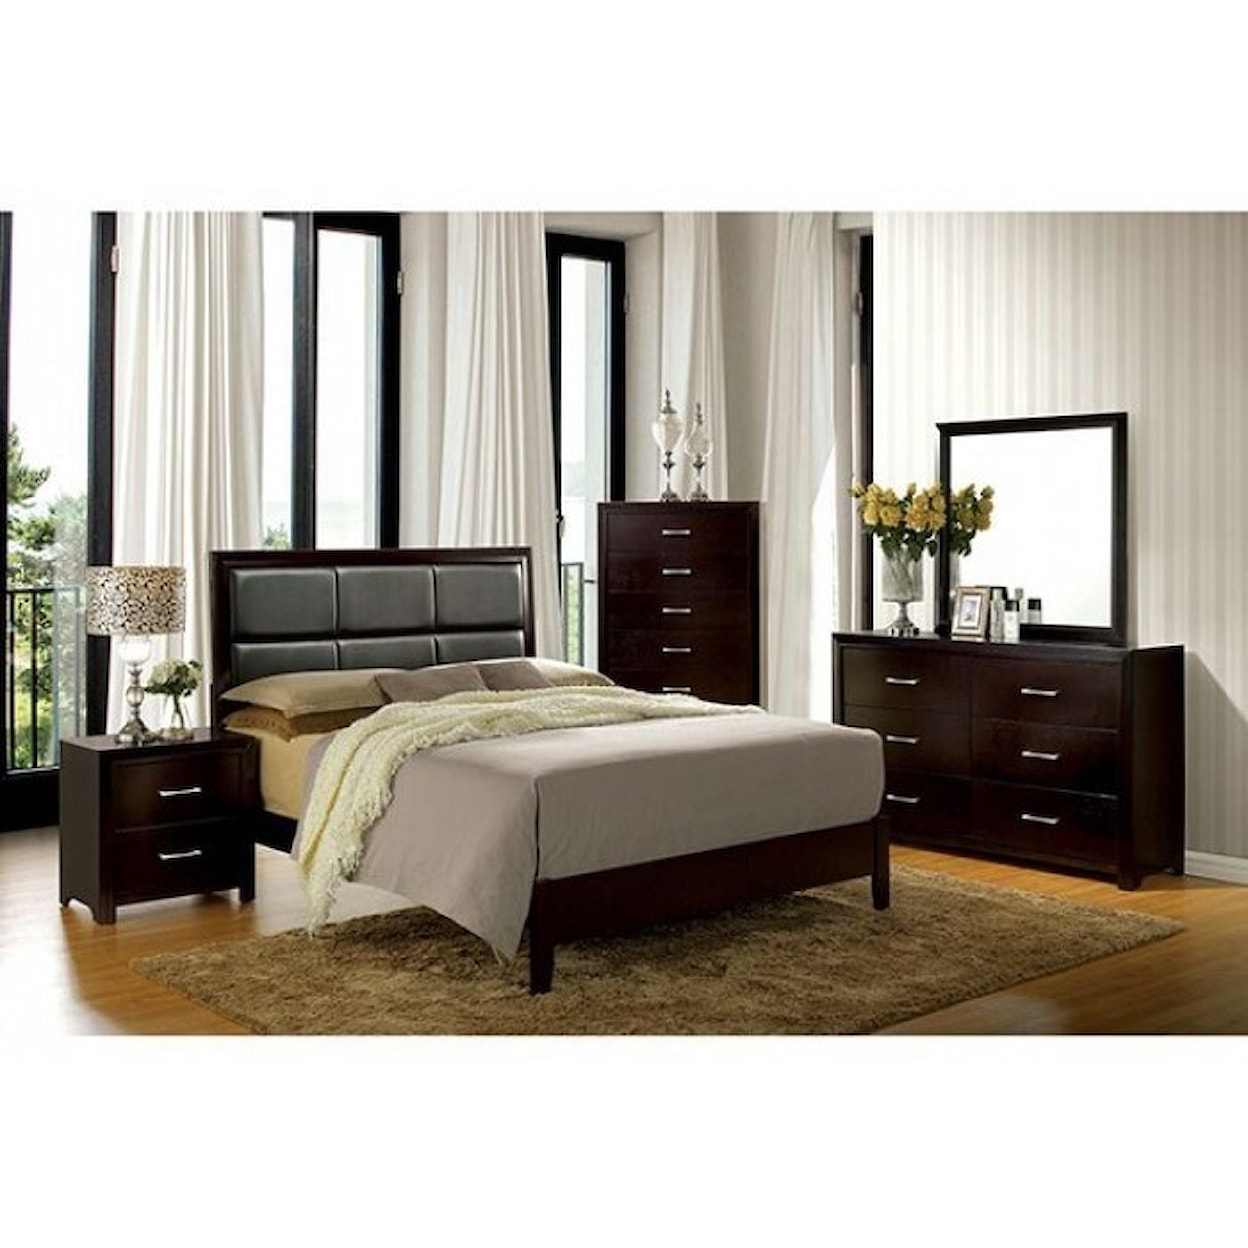 Furniture of America Janine California King Bedroom Group